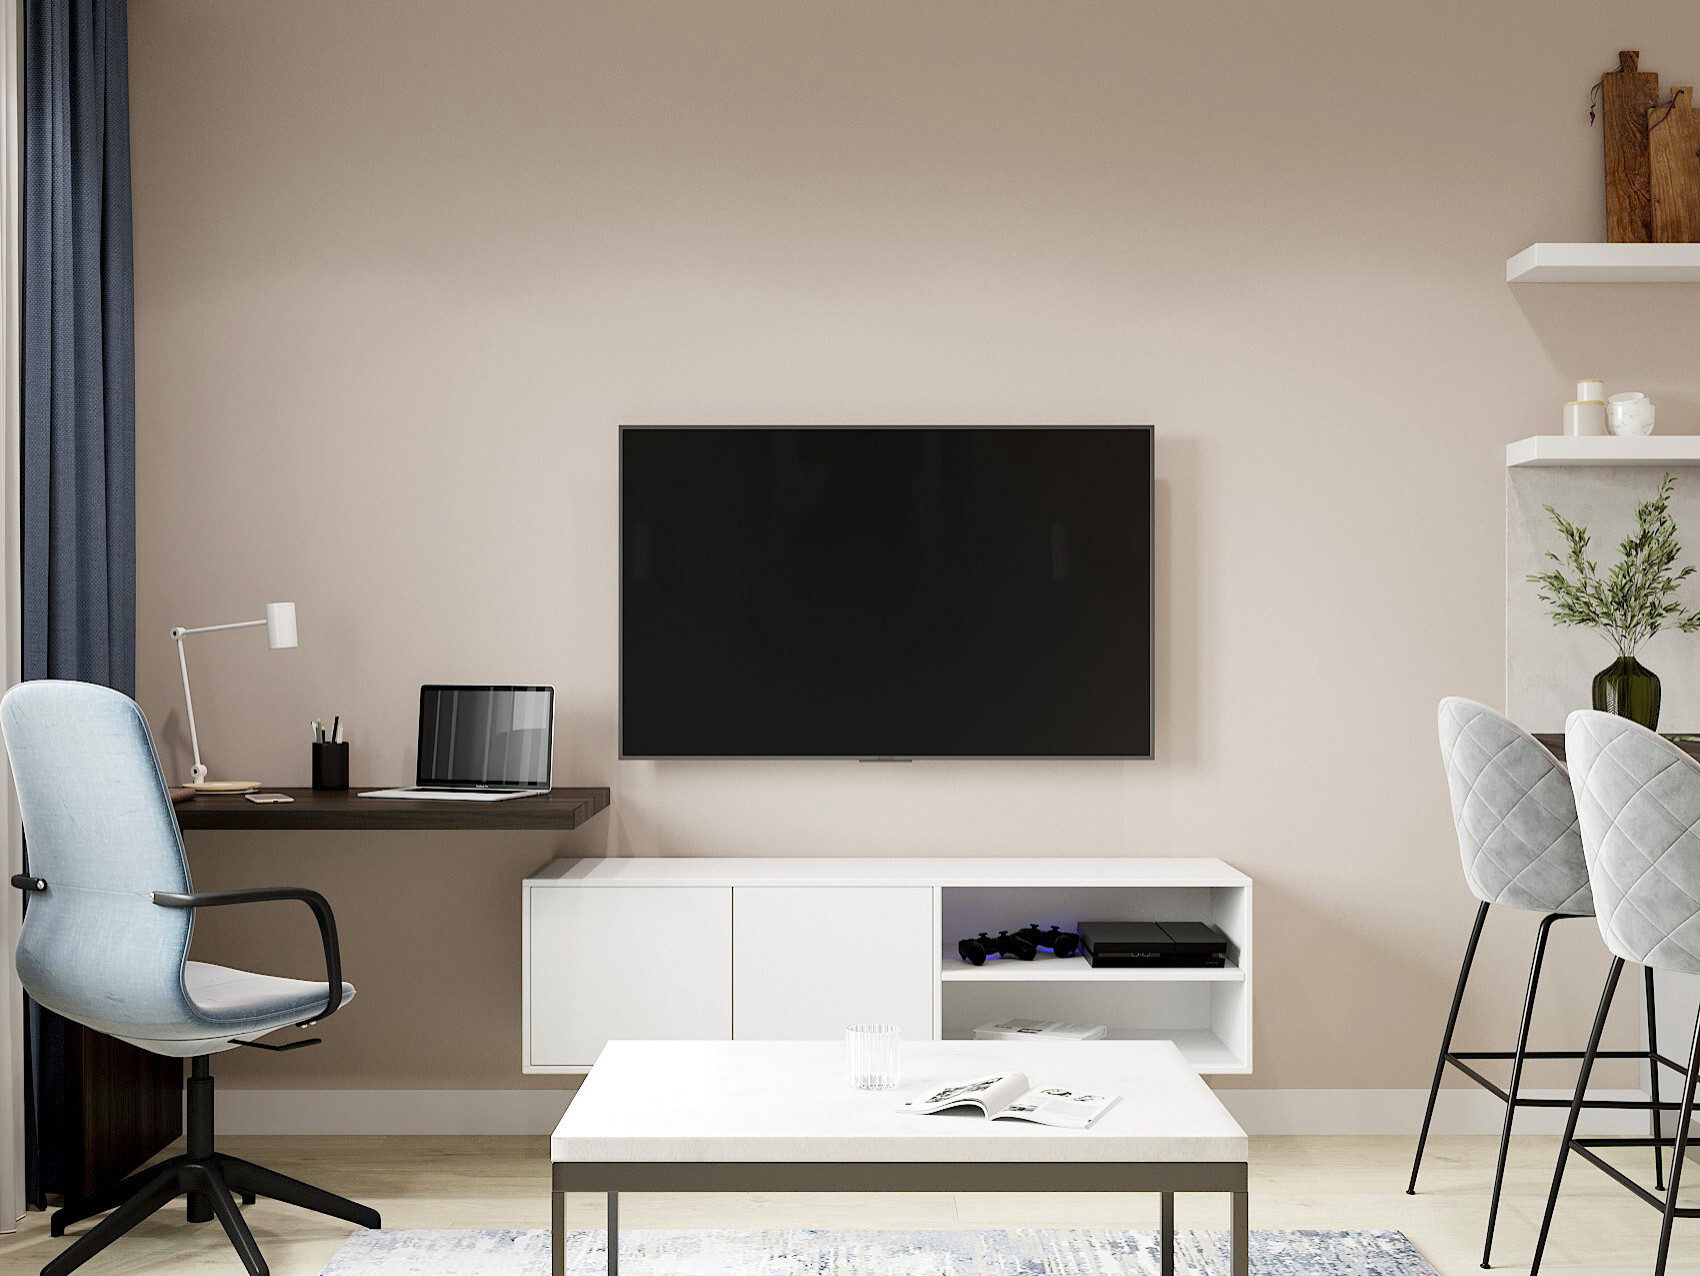 Интерьер с панно за телевизором, стеной с телевизором, телевизором на стене и керамогранитом на стену с телевизором